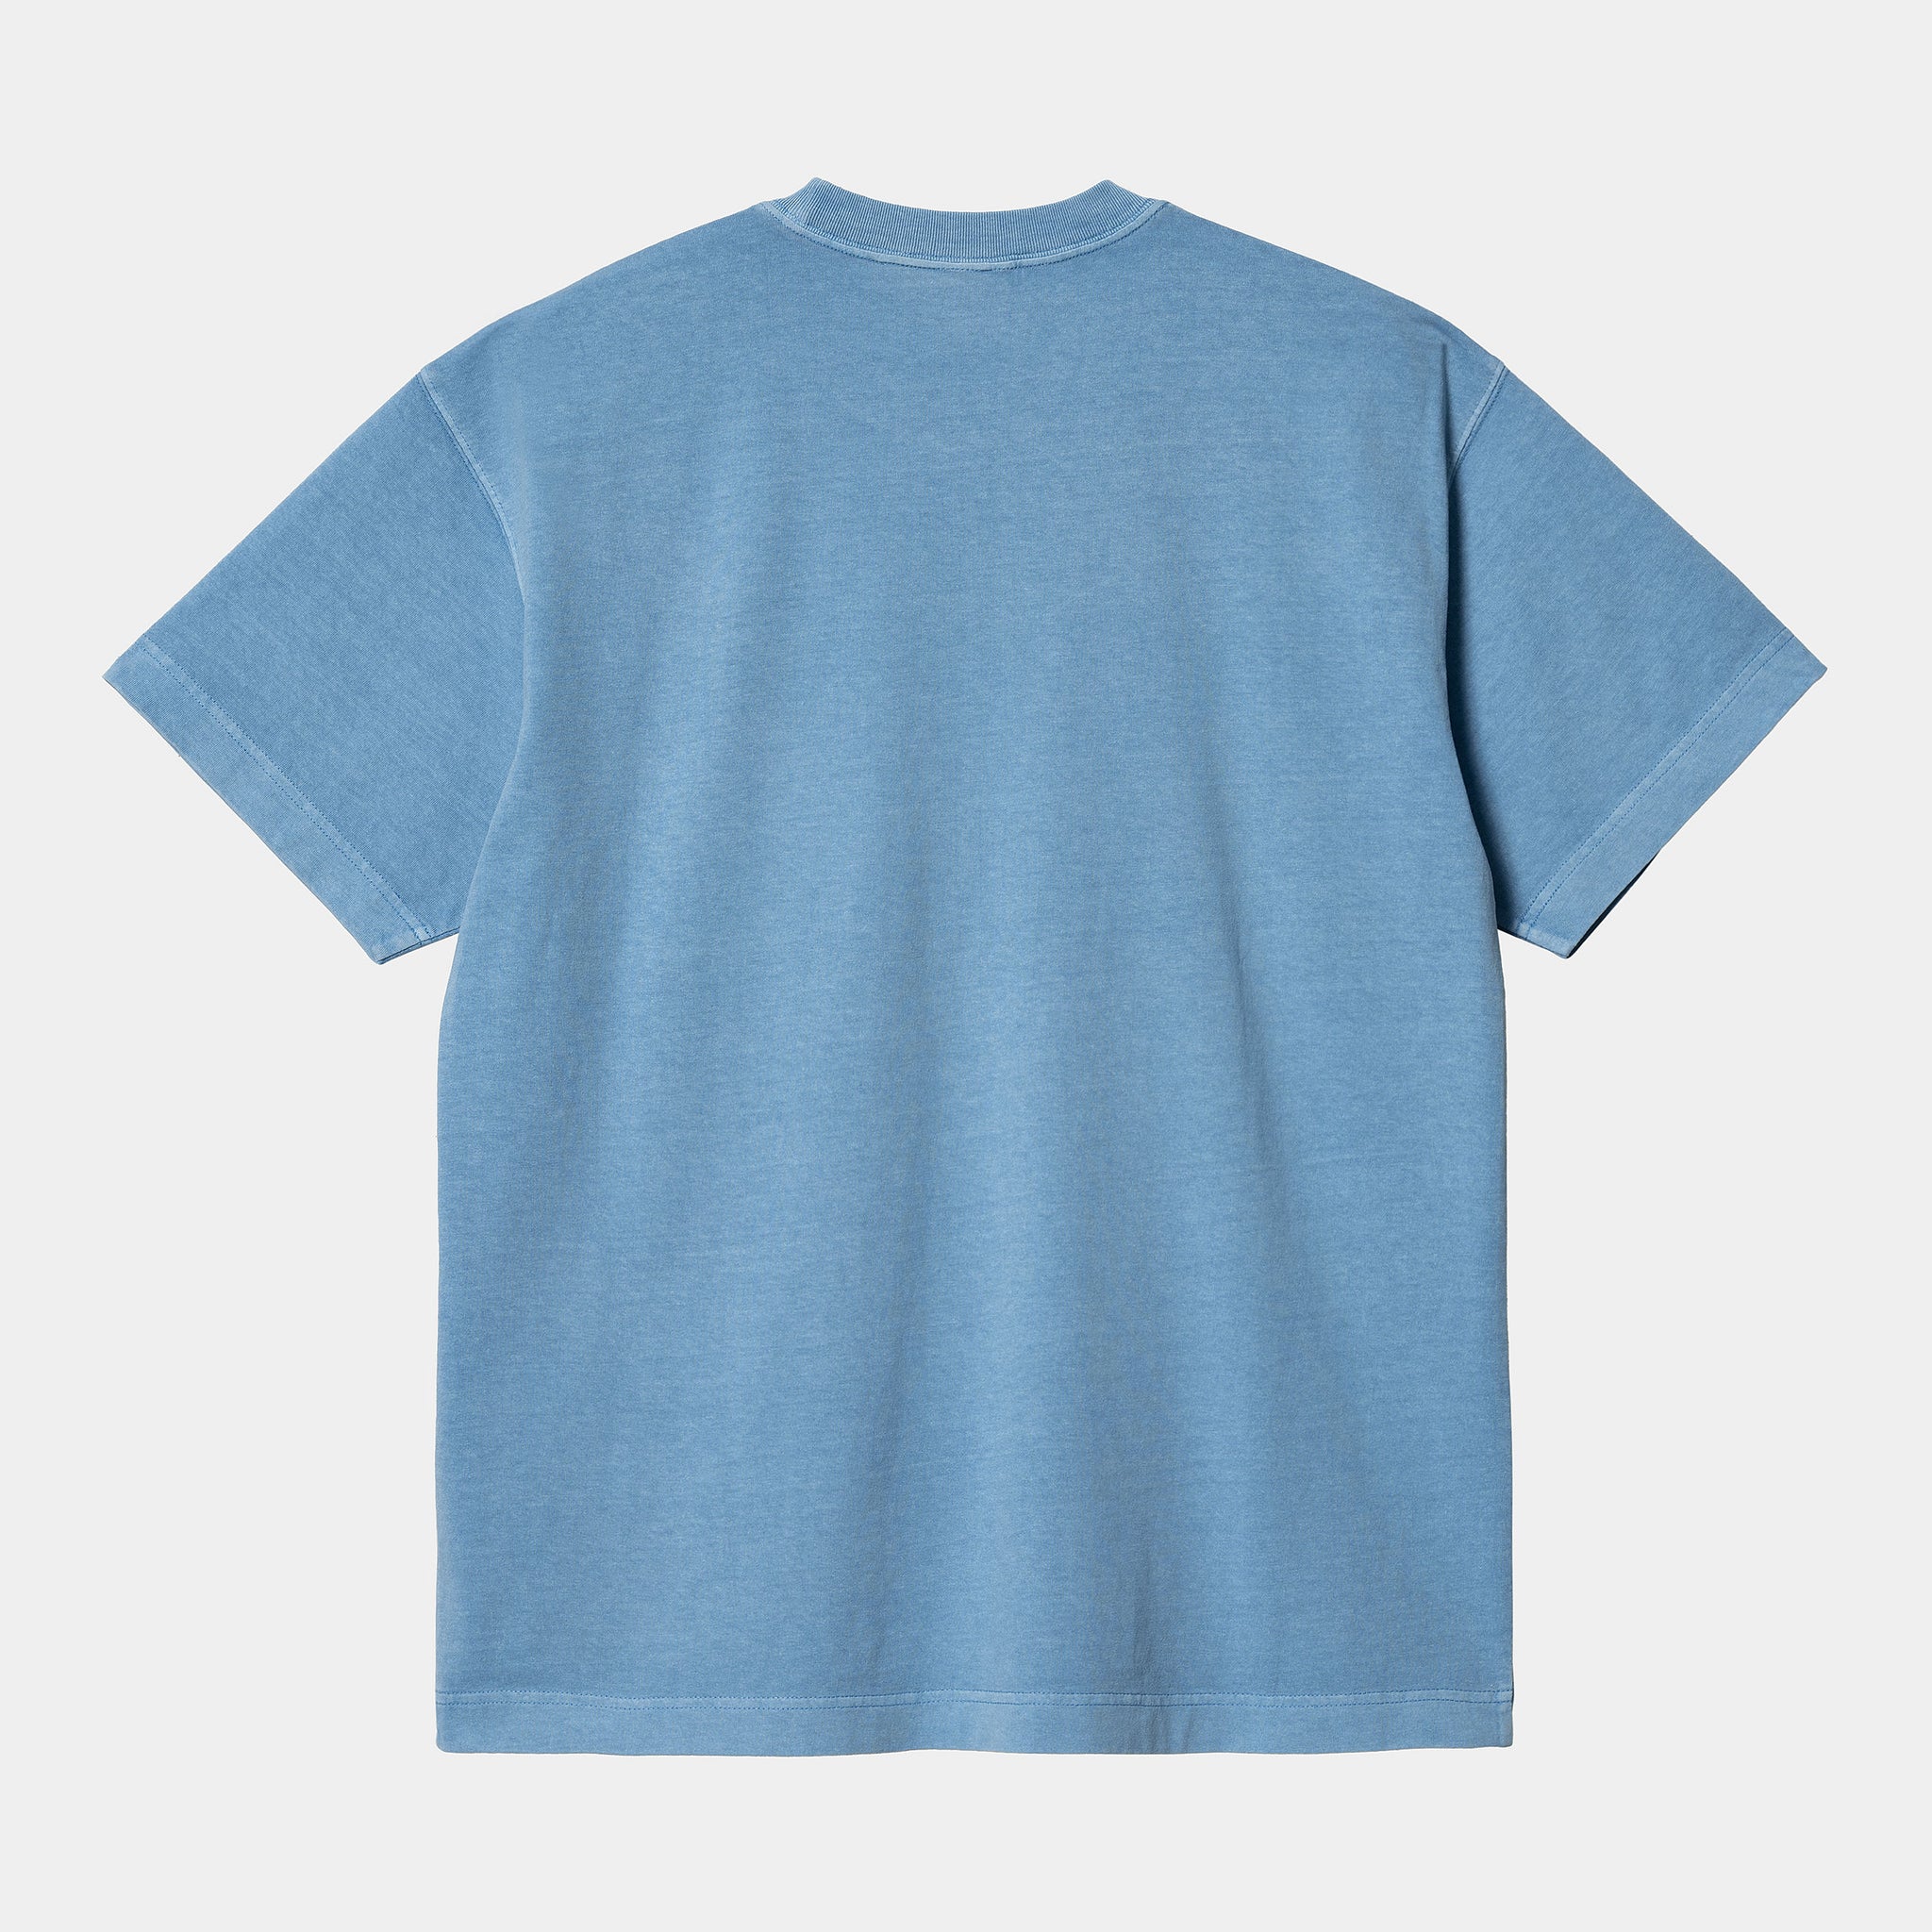 S/S Nelson T-Shirt Cotton Single Jersey, 195 g/m²  (Piscine garment dyed)